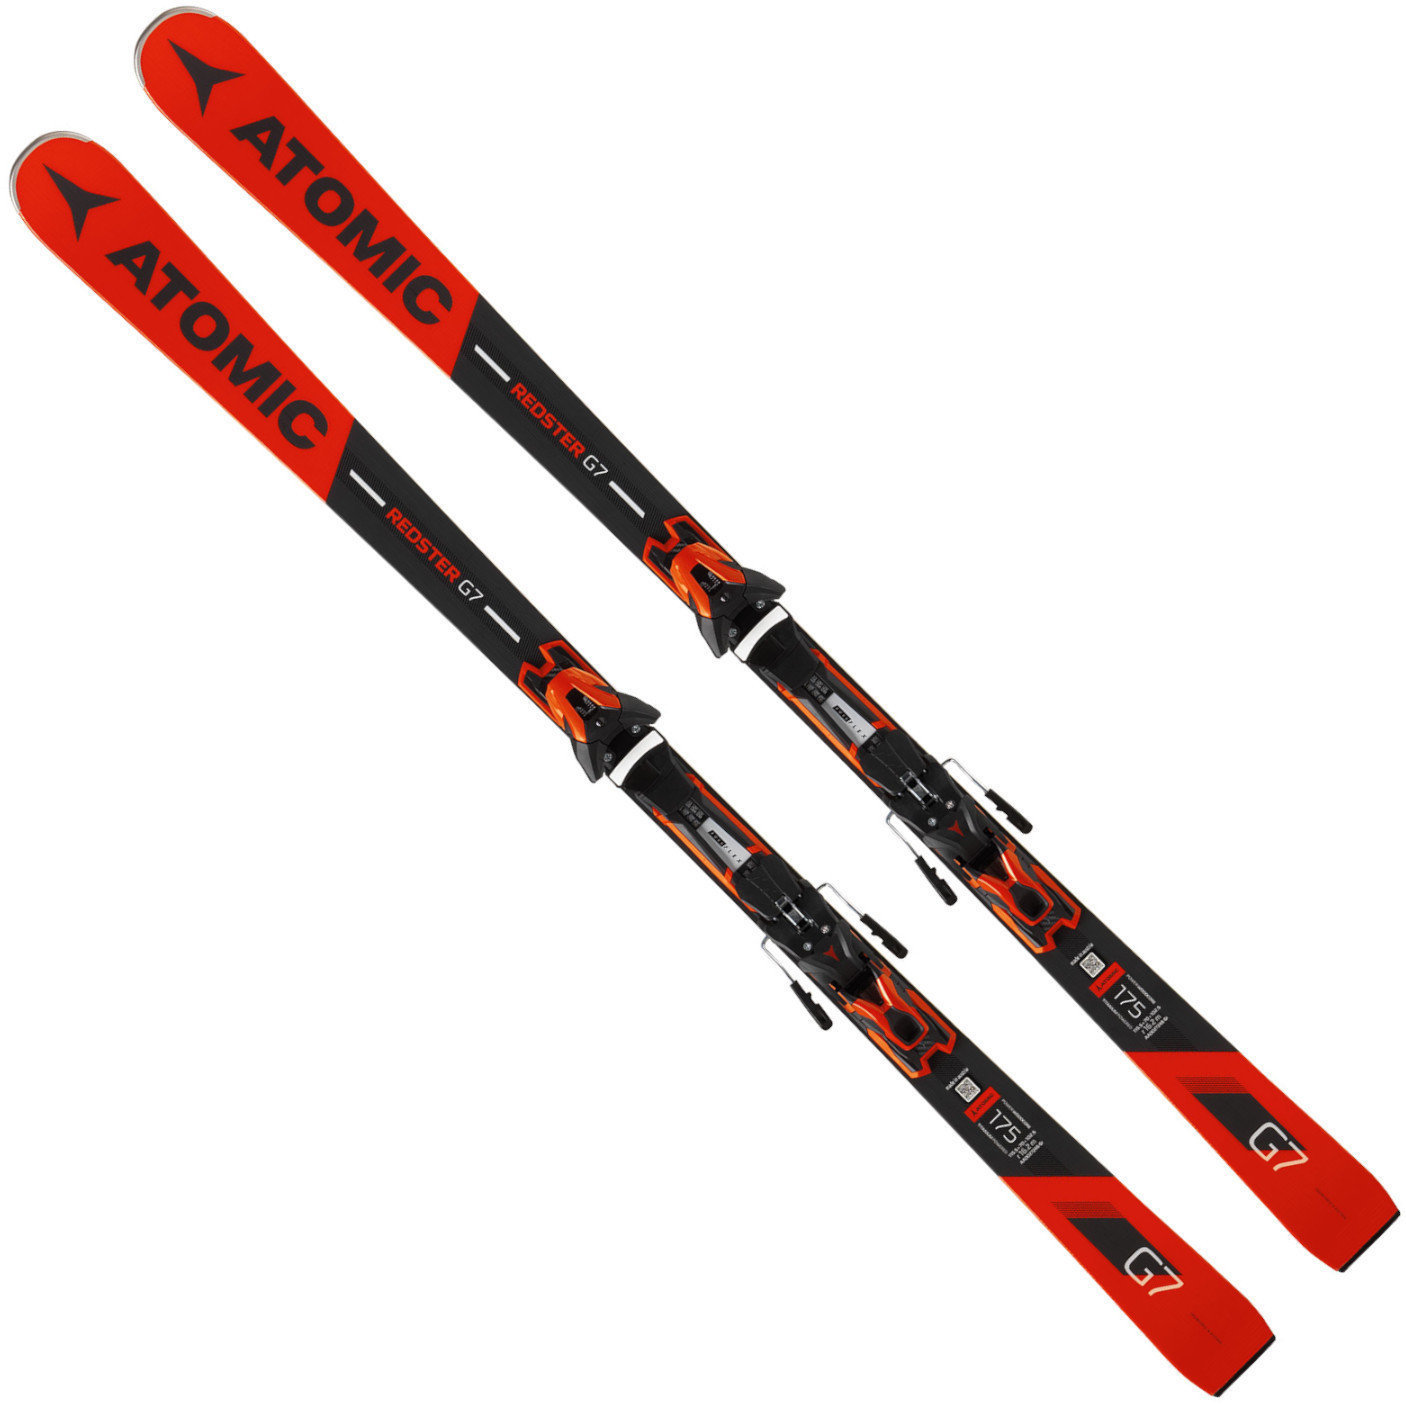 Skidor Atomic Redster G7 + FT 12 GW 175 18/19 skis